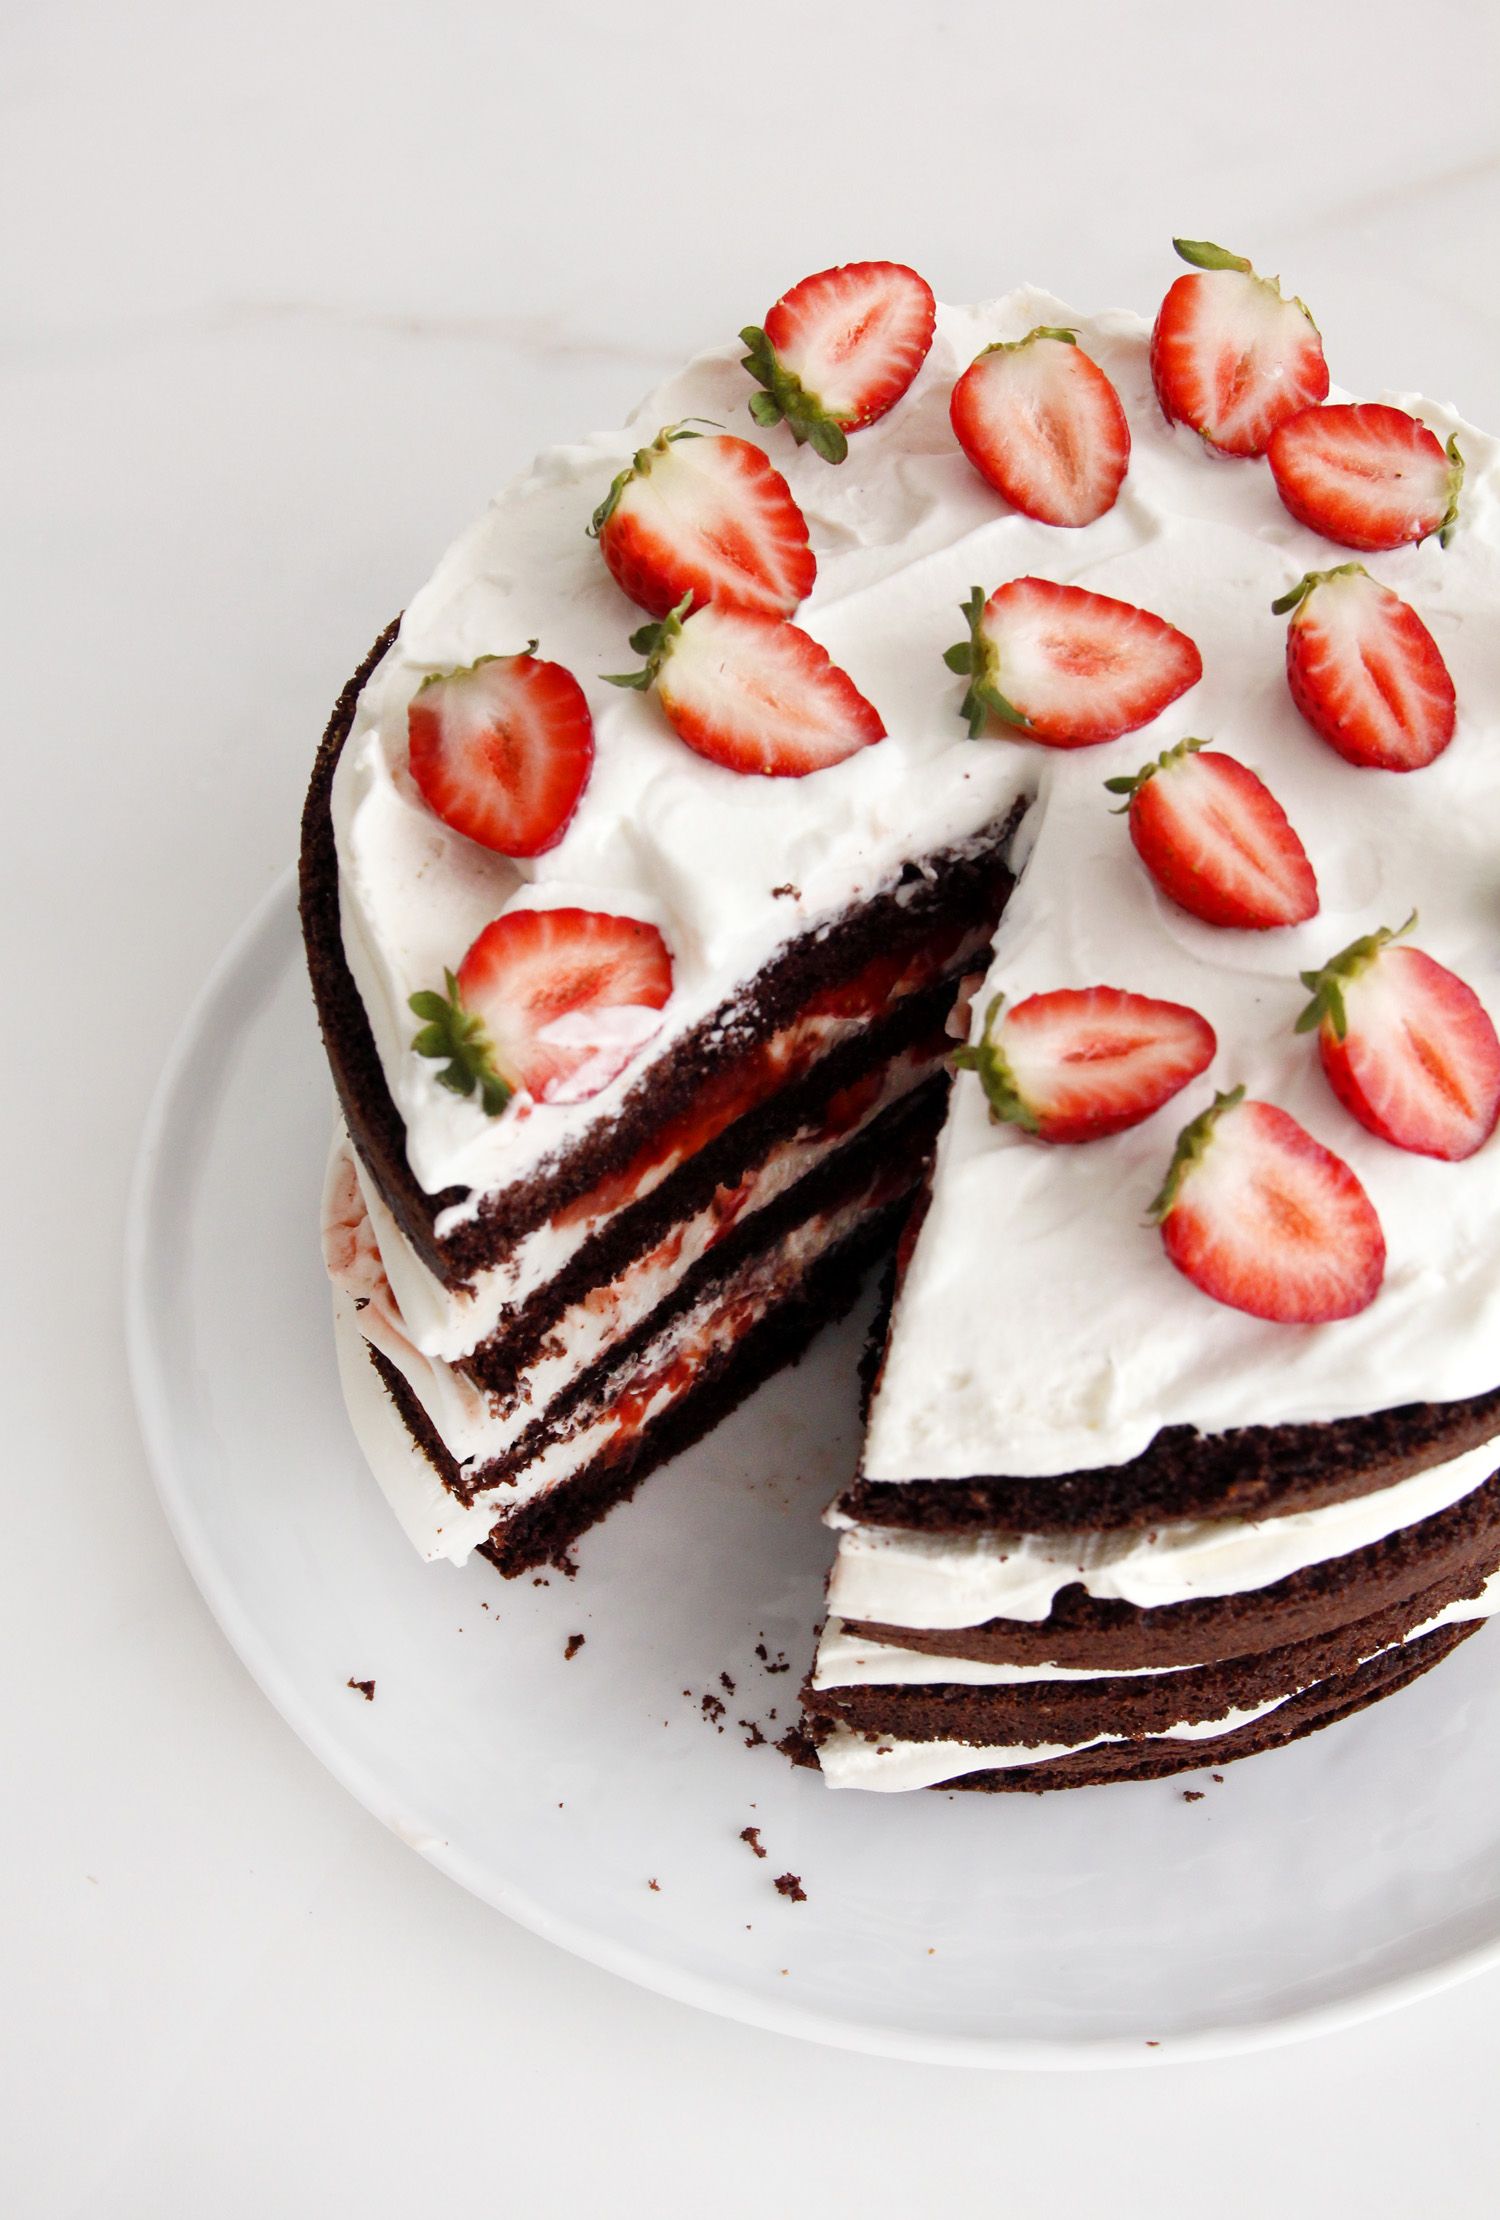 Sky-high Chocolate, Cream and Strawberry Layer Cake